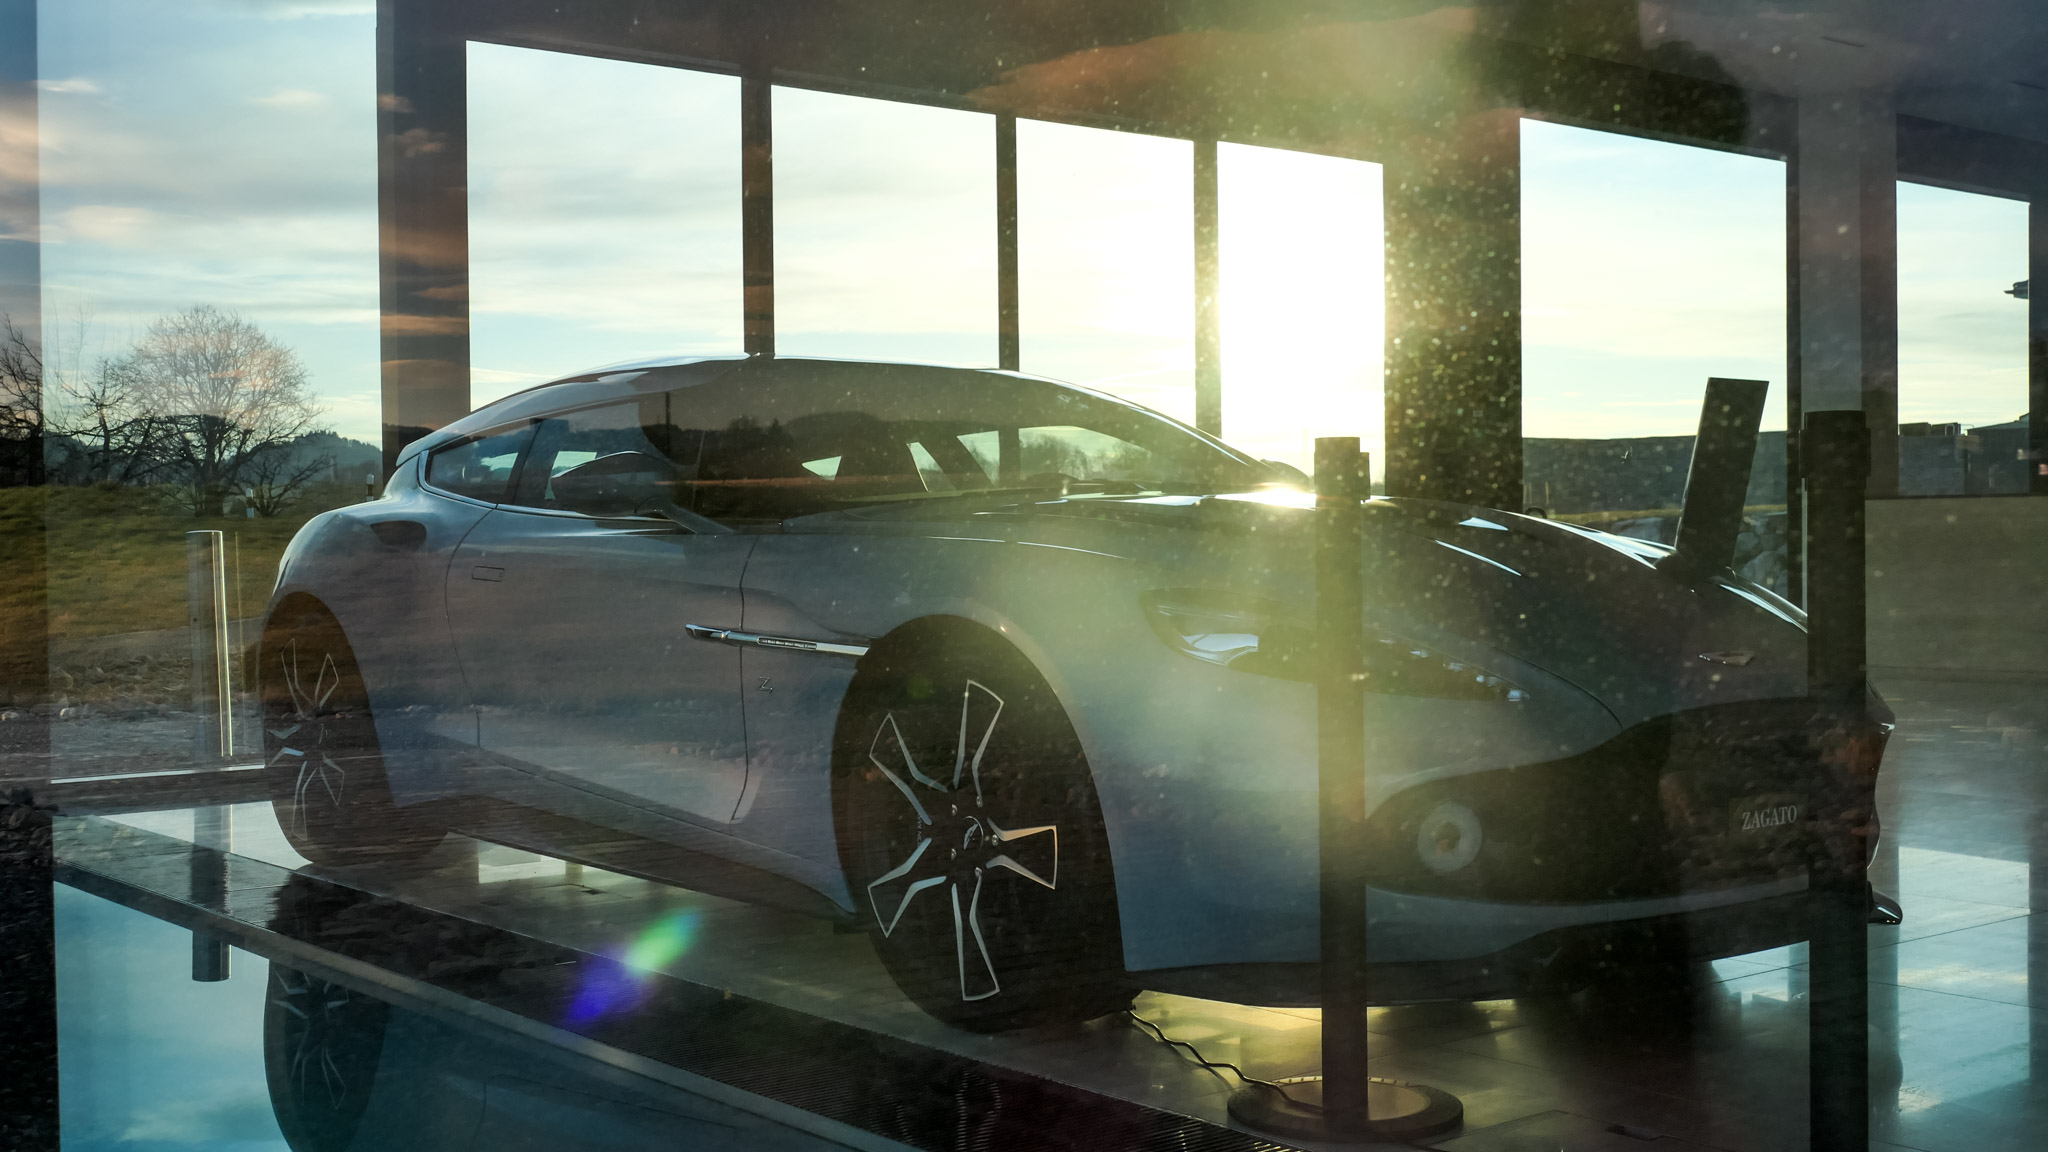 Aston Martin Vanquish Zagato Shooting Brake (AM St. Gallen)